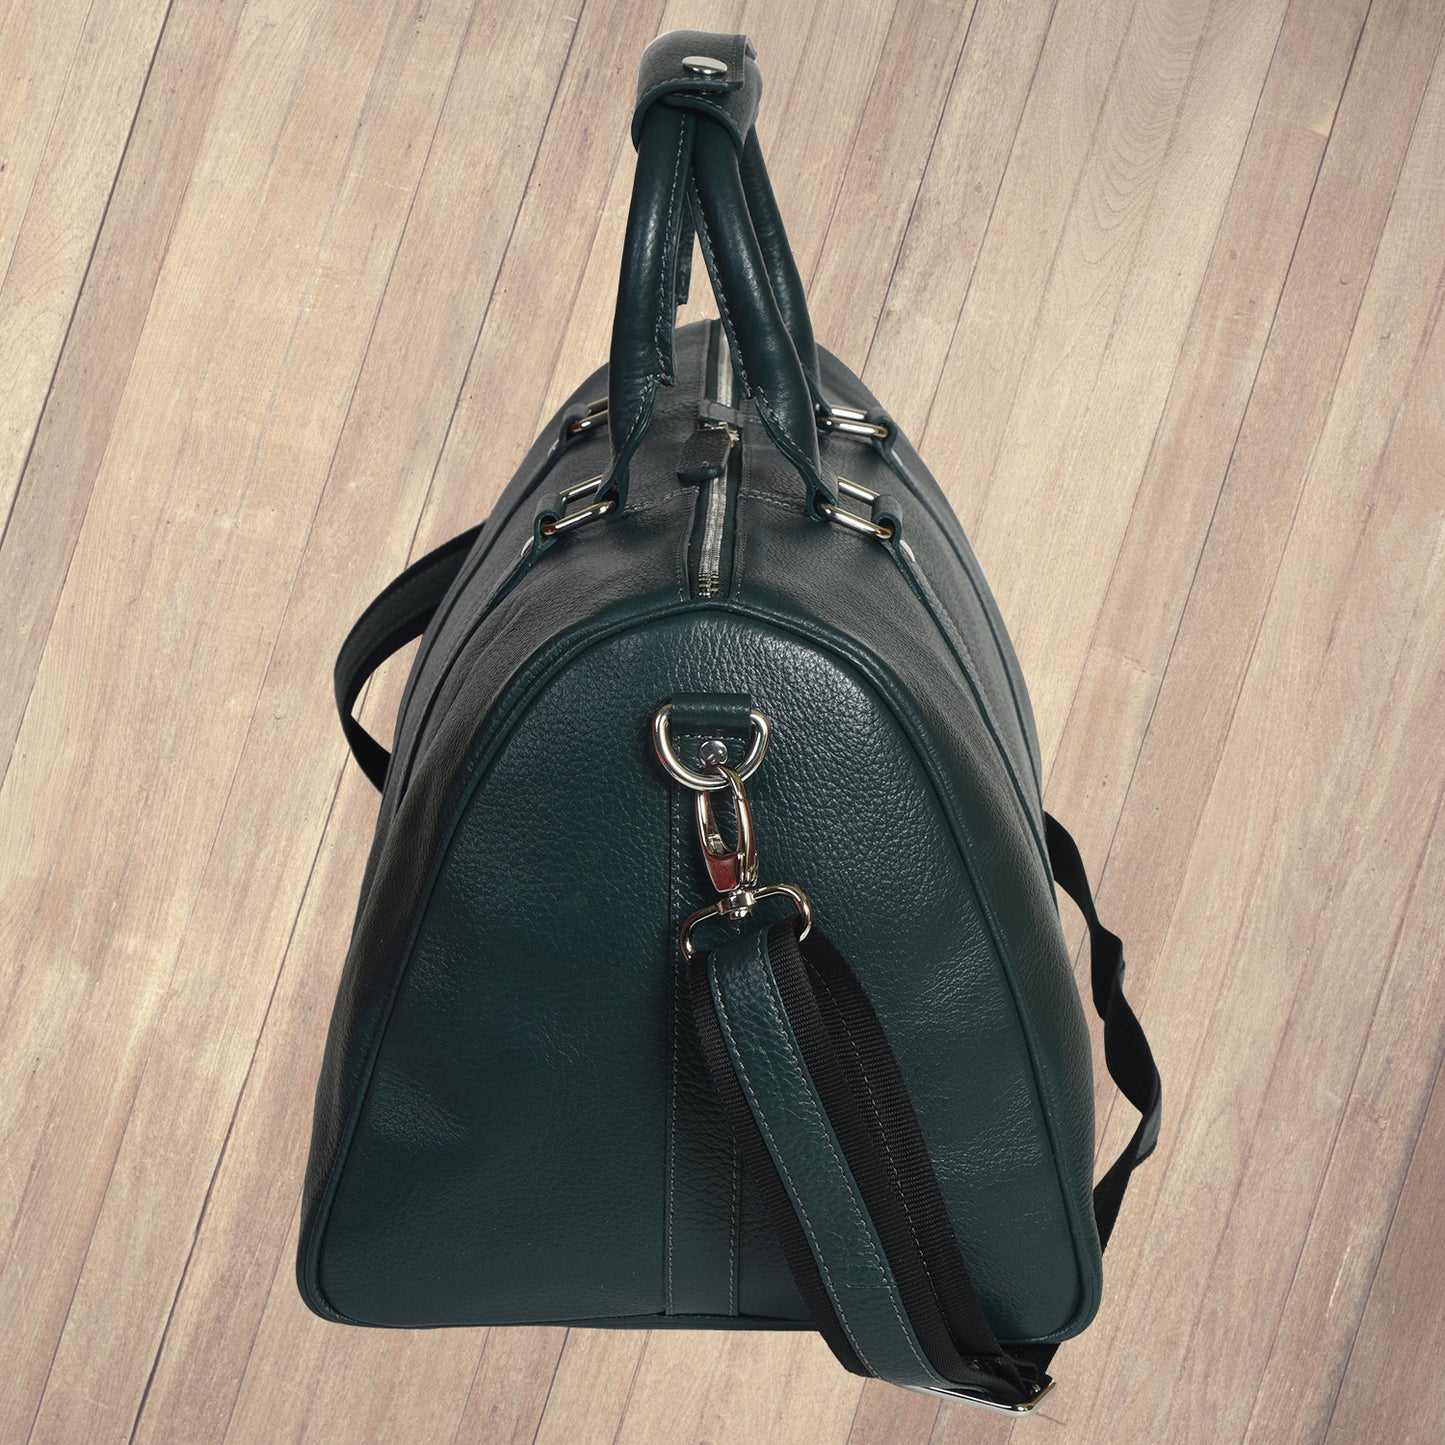 GT-KL1: G&T Full-grain Leather Small Holdall, Weekender, Luggage, Gym Bag, Duffel Bag, Overnight Bag